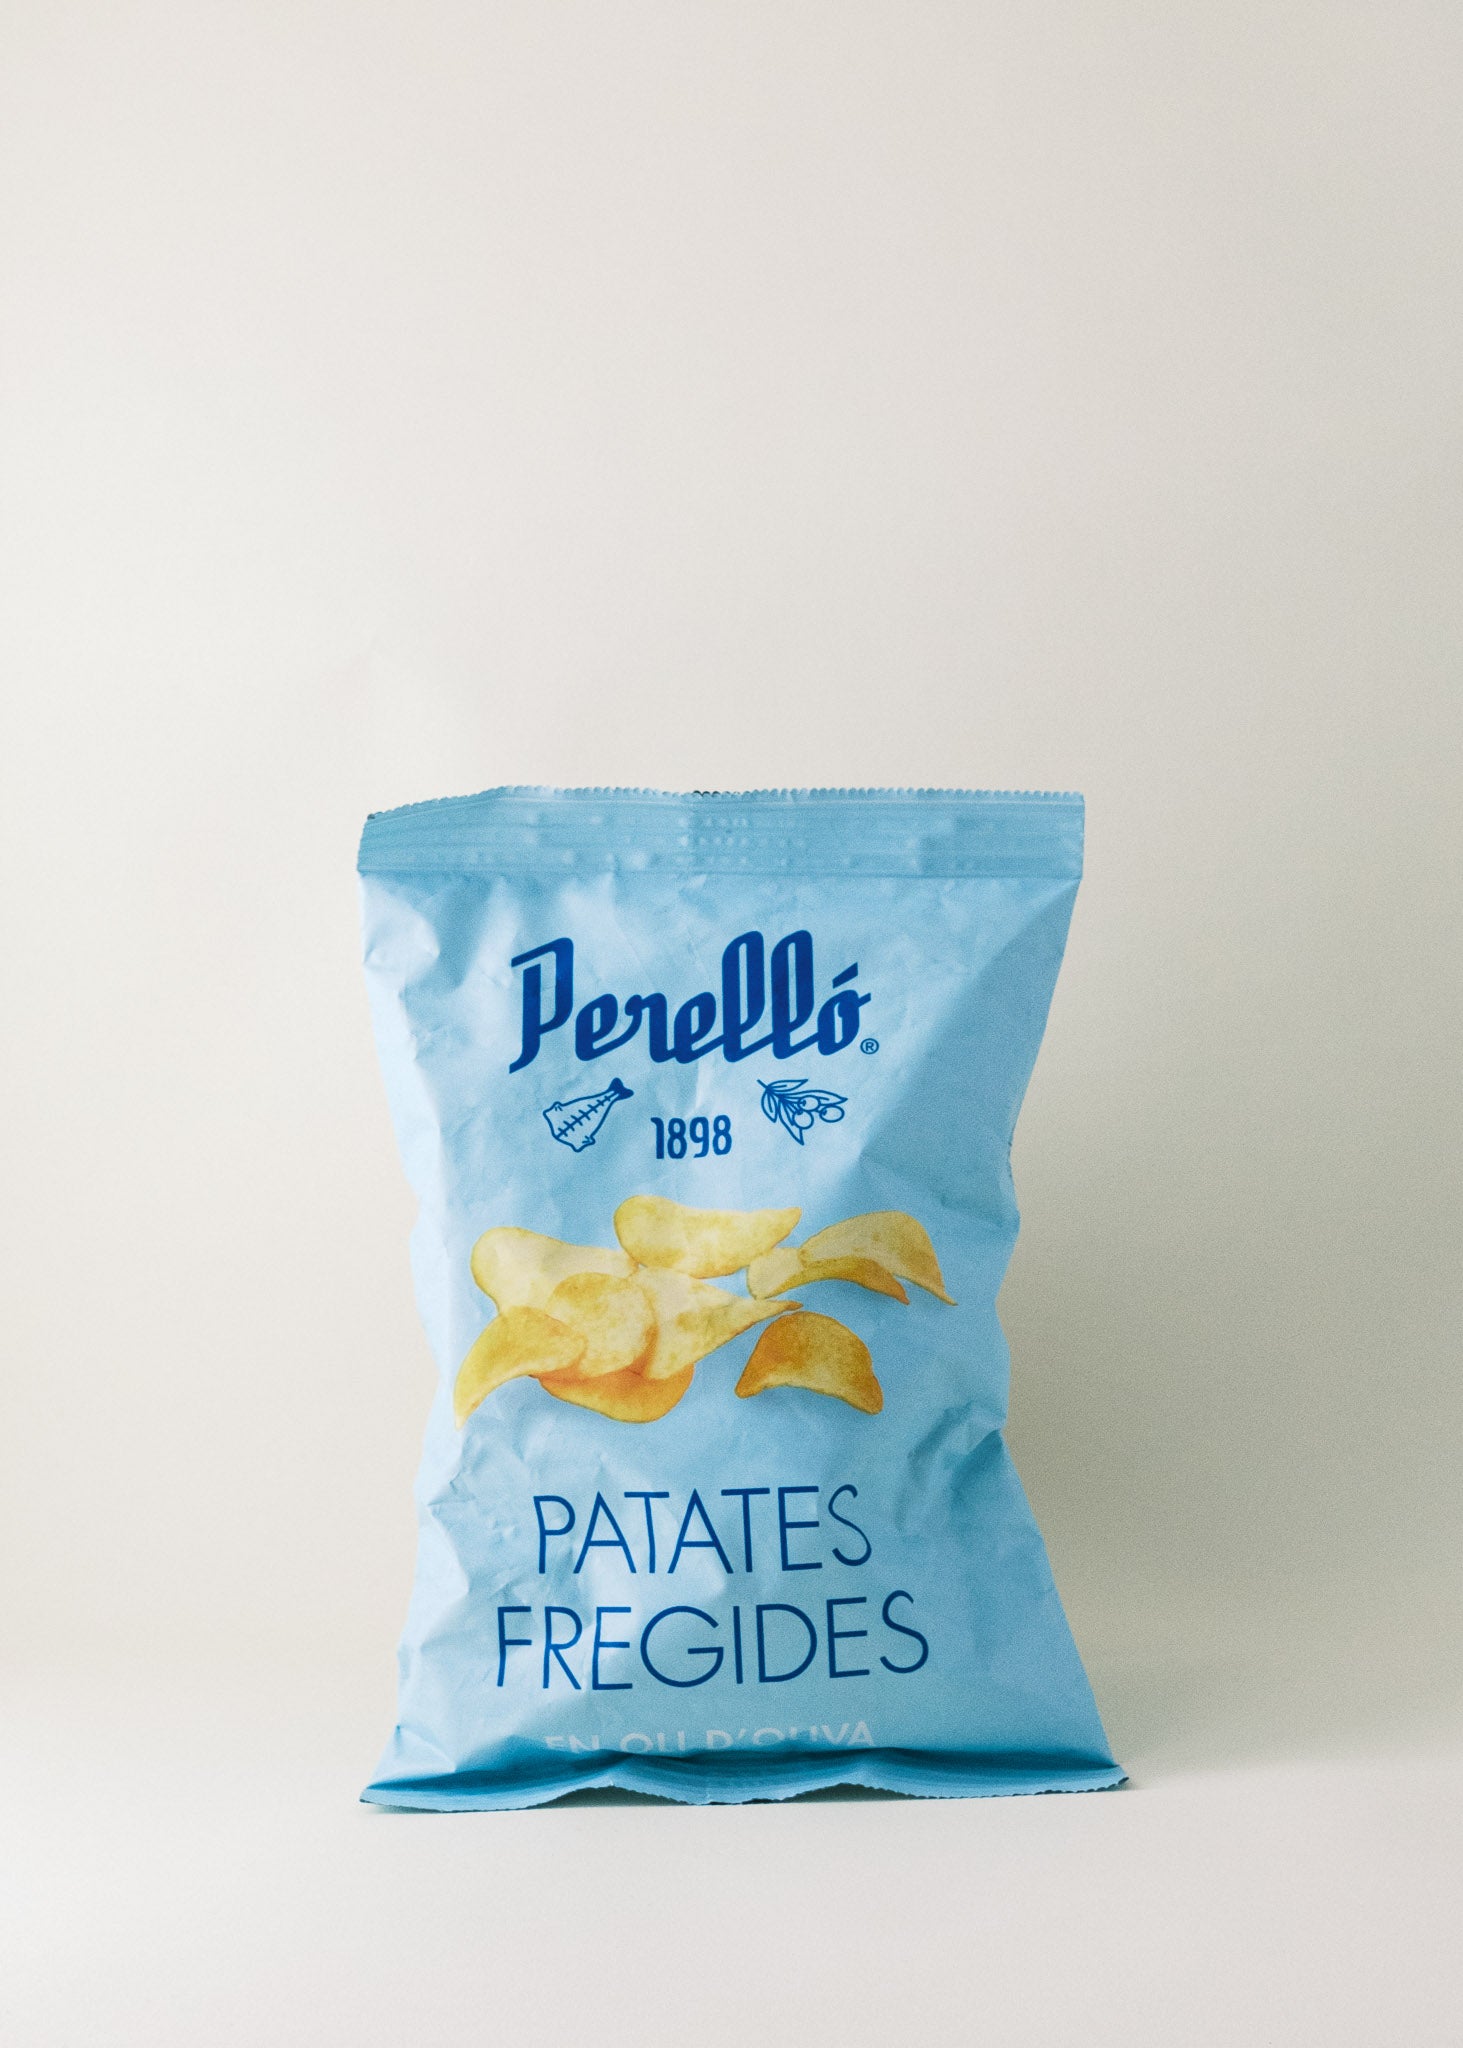 Patates Perelló